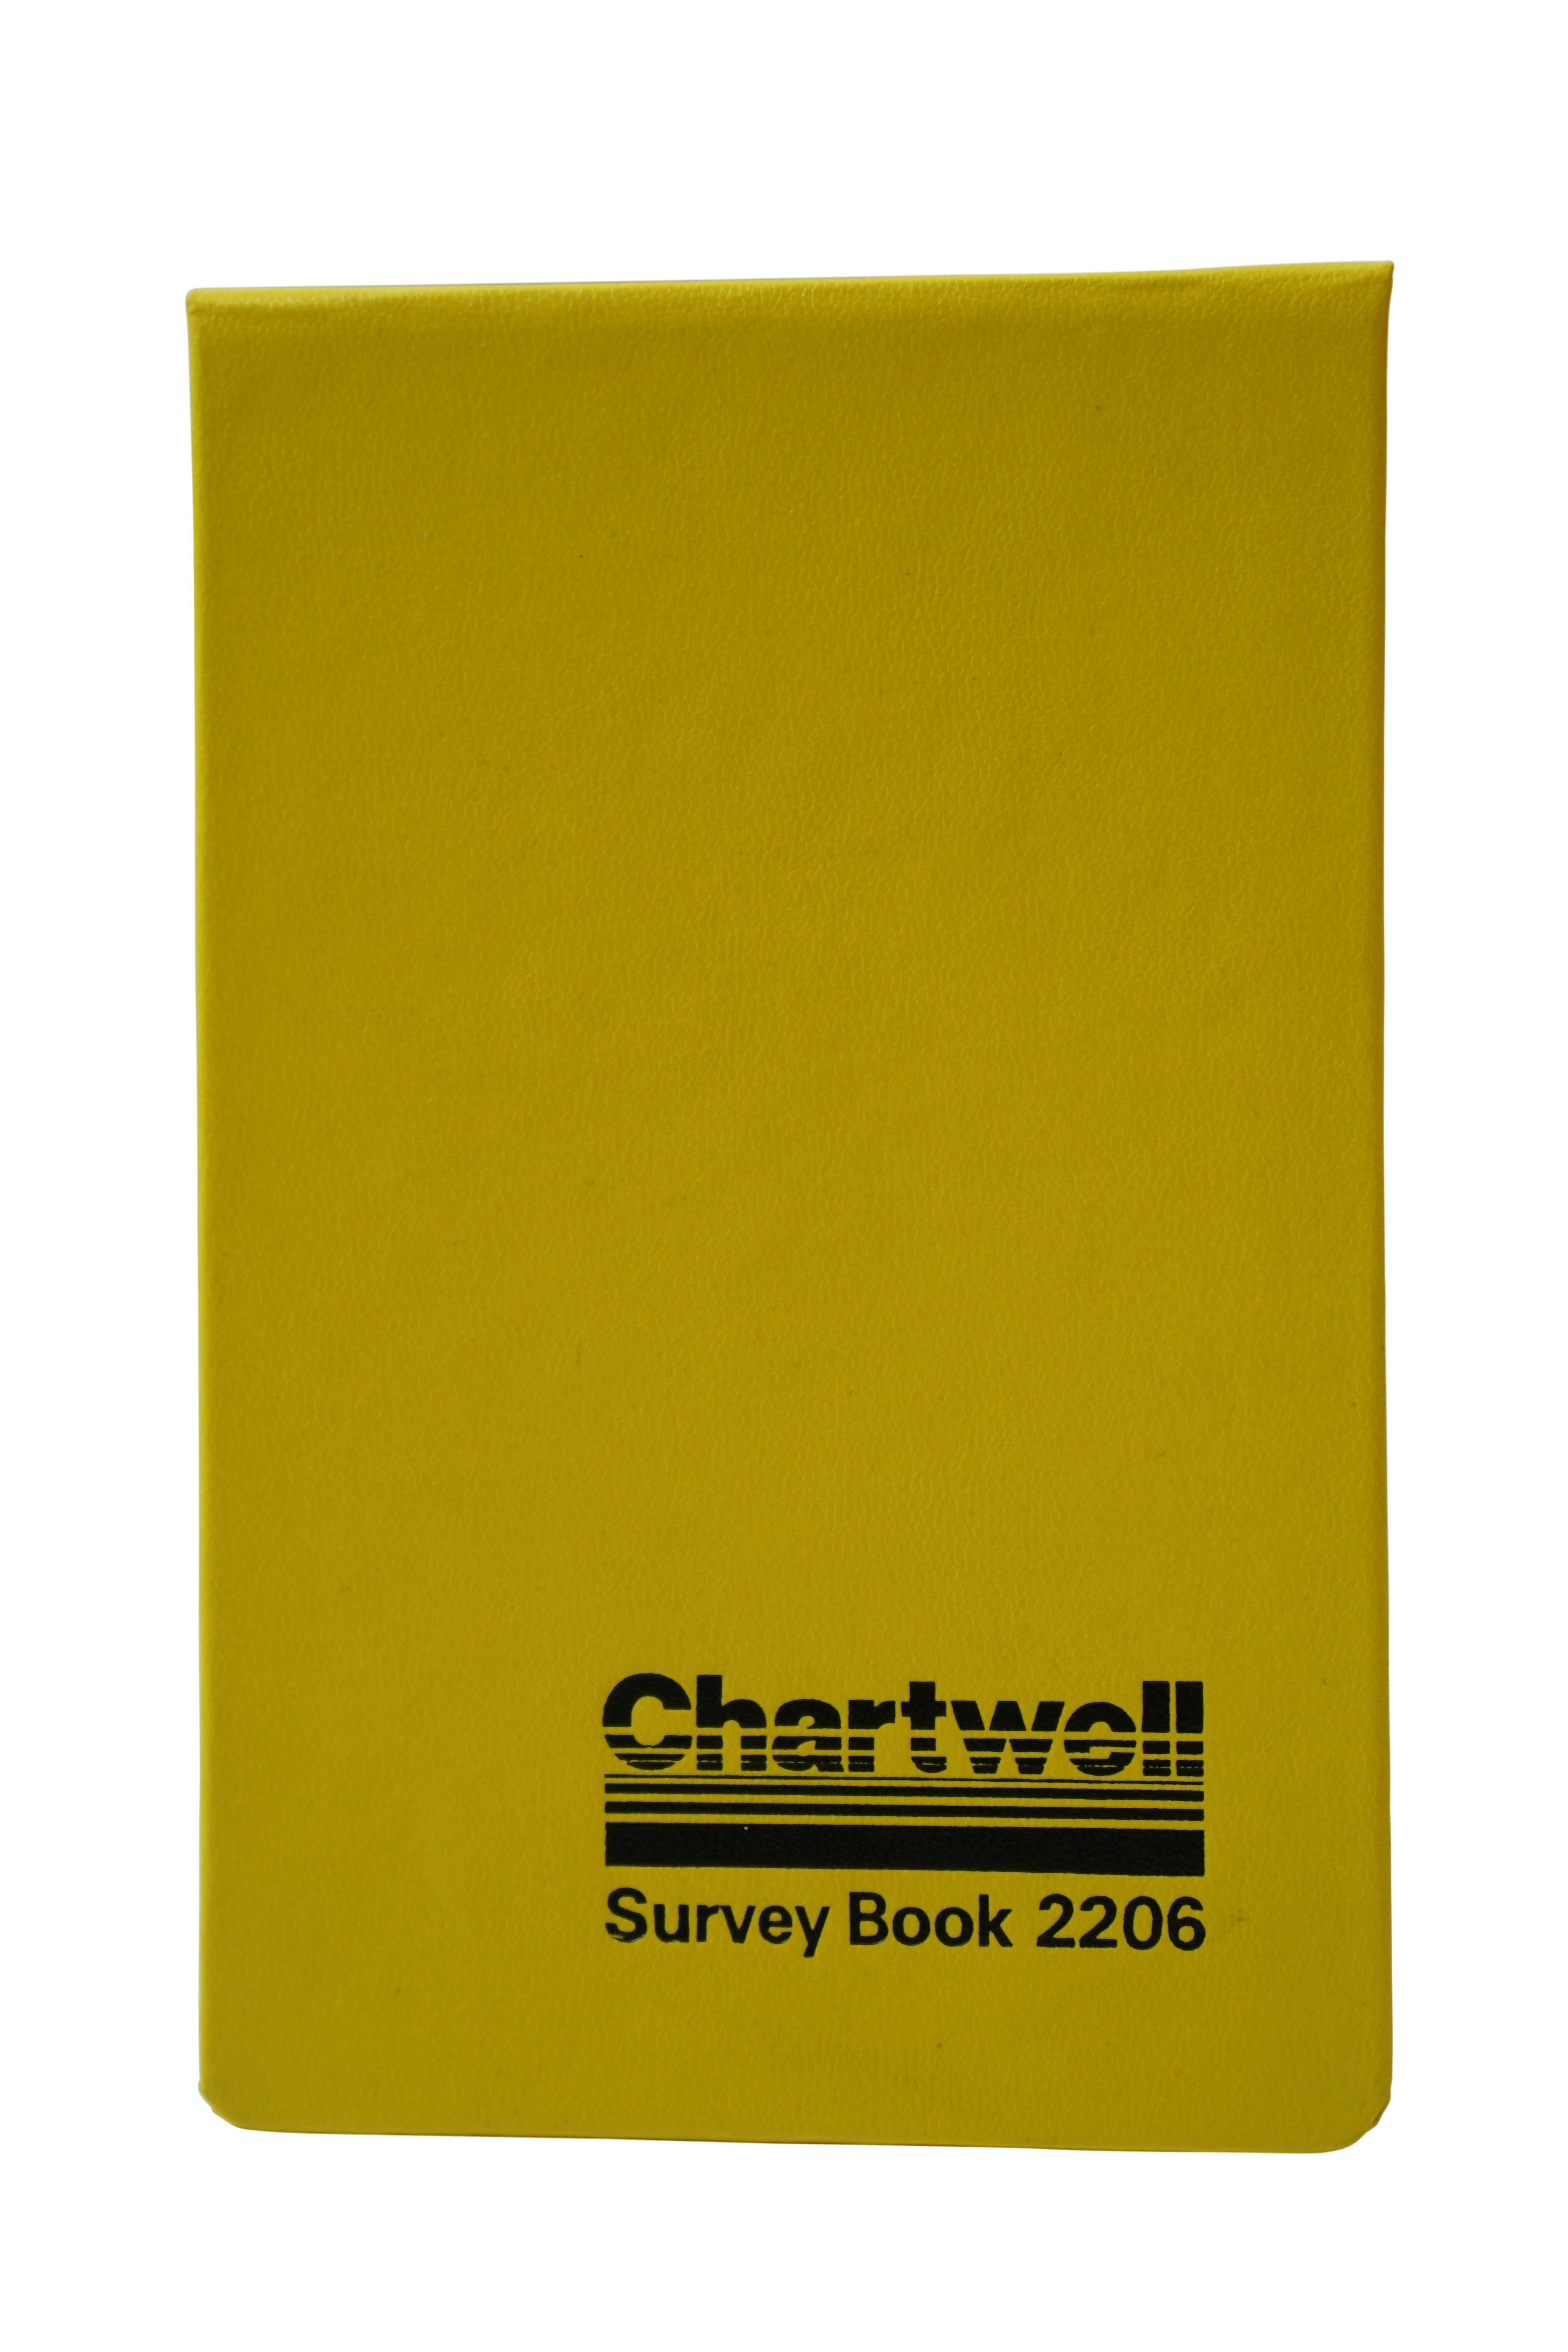 2426 Chartflow Survey Book